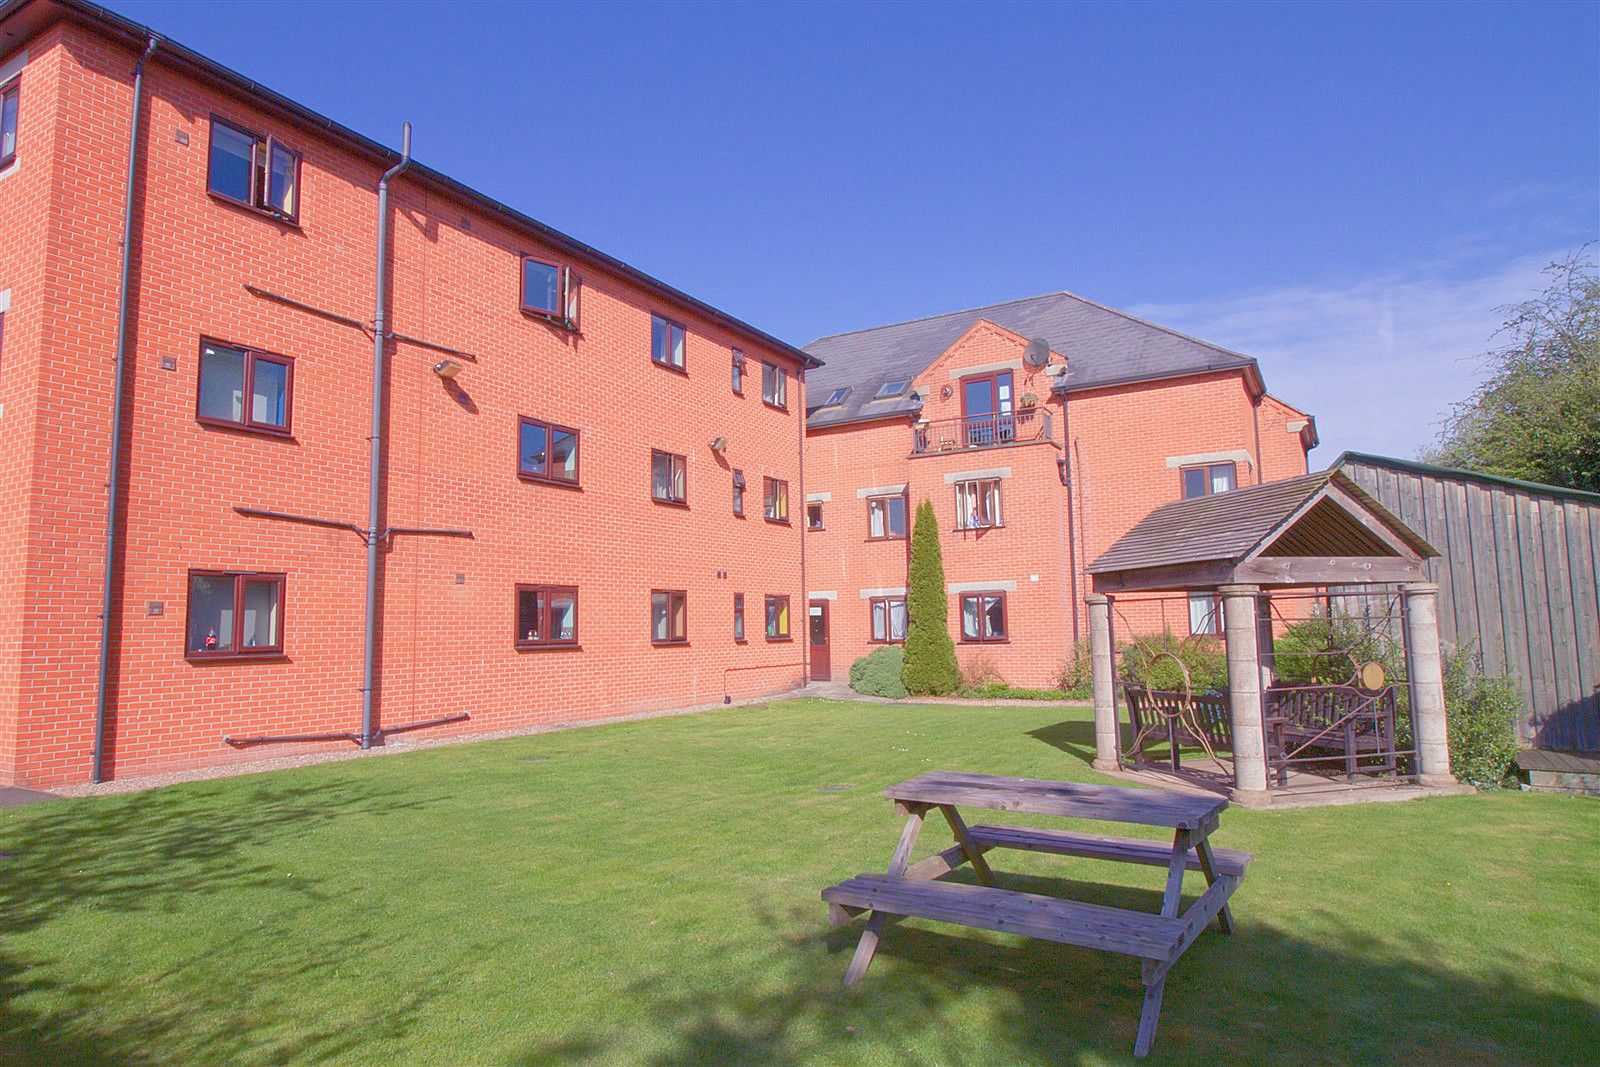 Kingfisher Halls Student Accommodation Block A - en-suite, studios and 1 bedroom flats